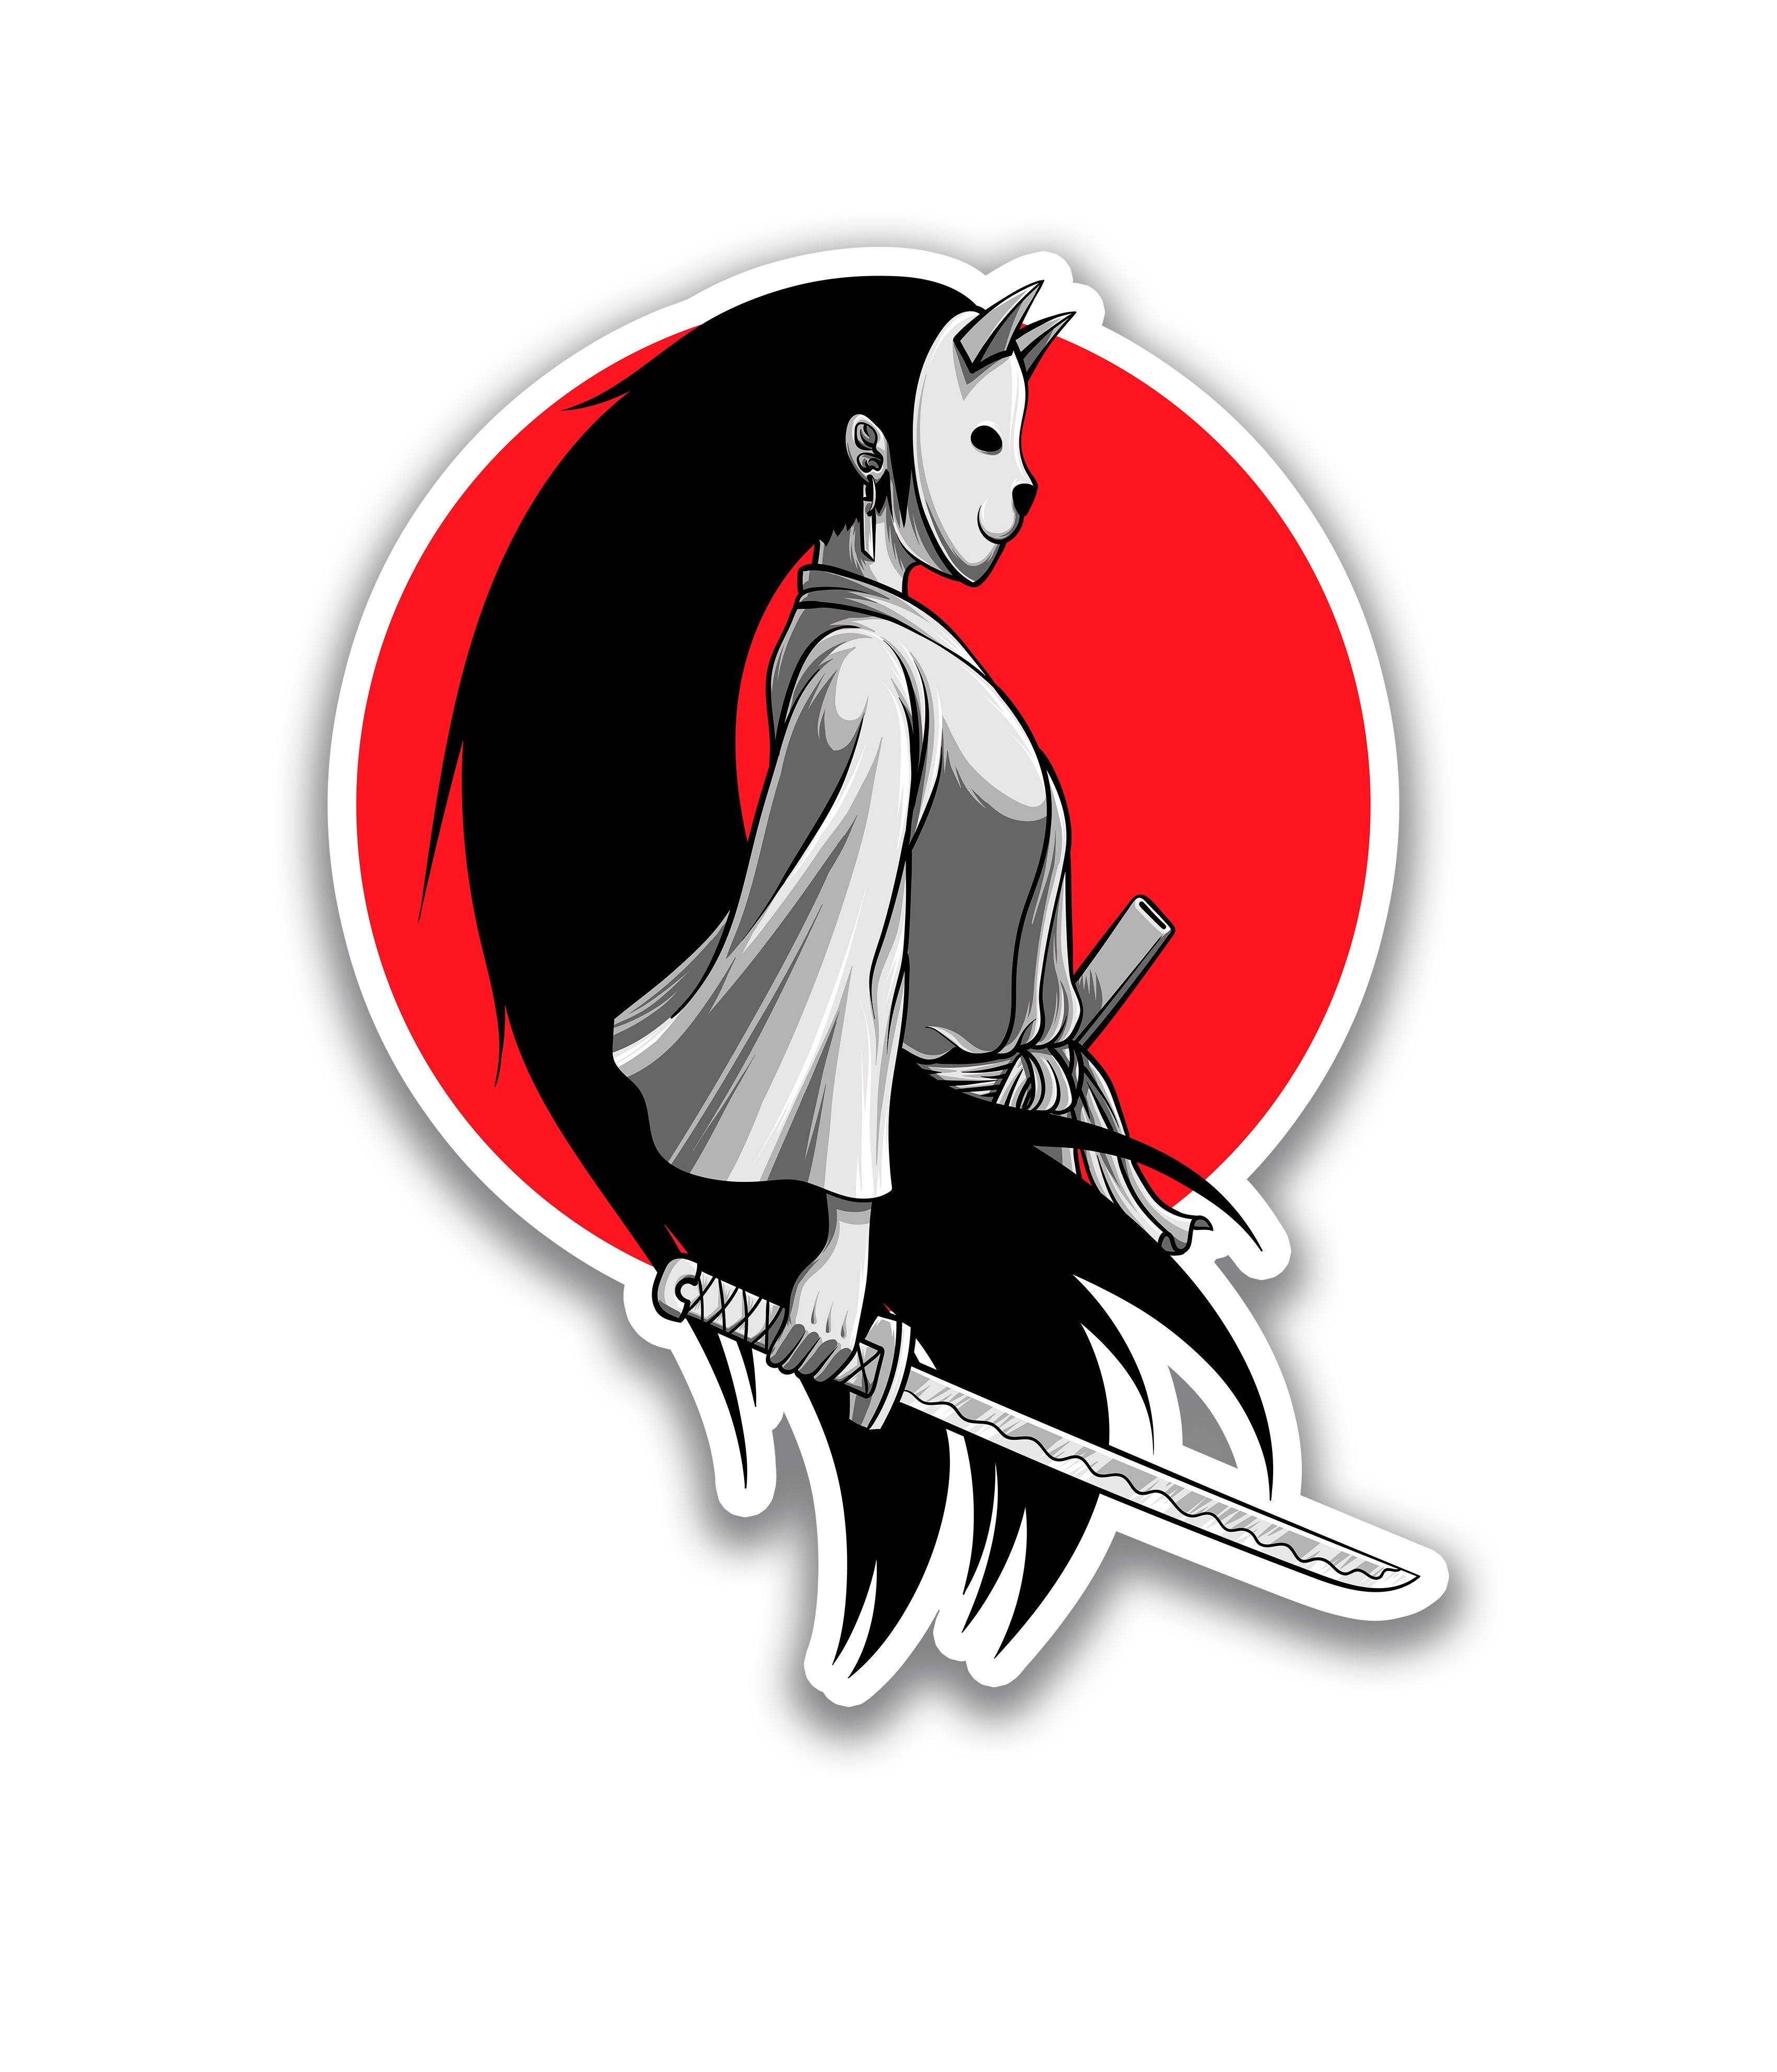 Samurai - Rei do Sticker